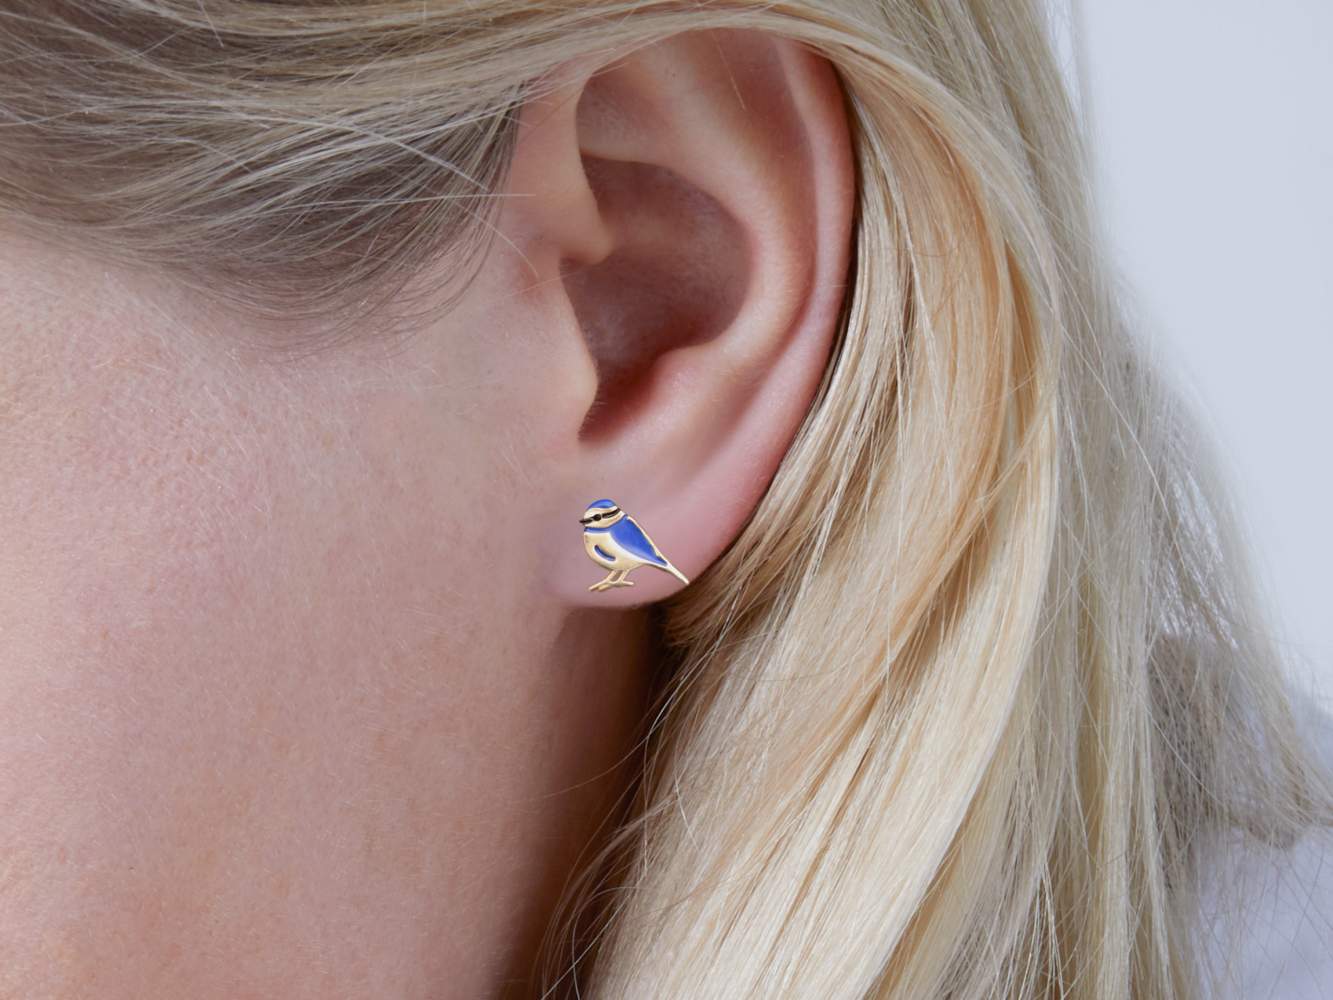 Blue Tit stud earrings. Vermeil gold plated sterling silver